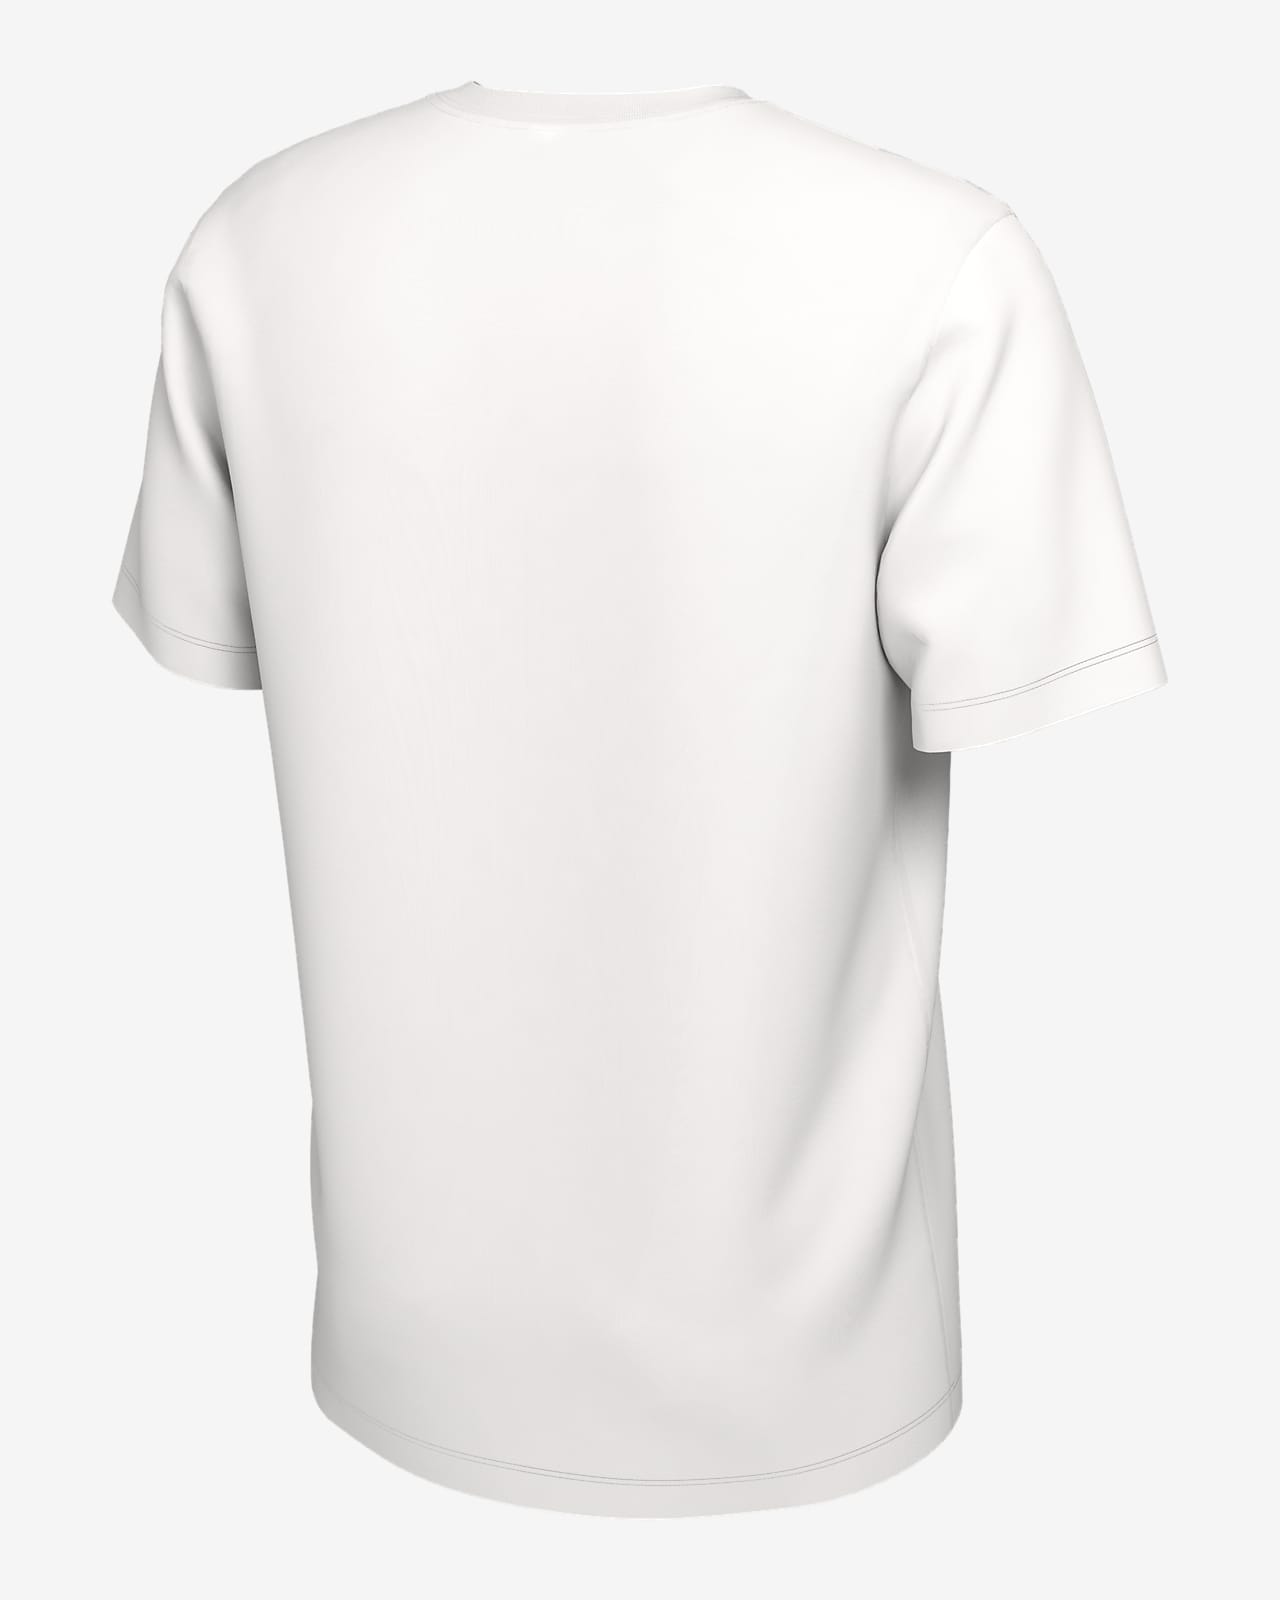 Men's WNBA Nike White Logo Performance T-Shirt